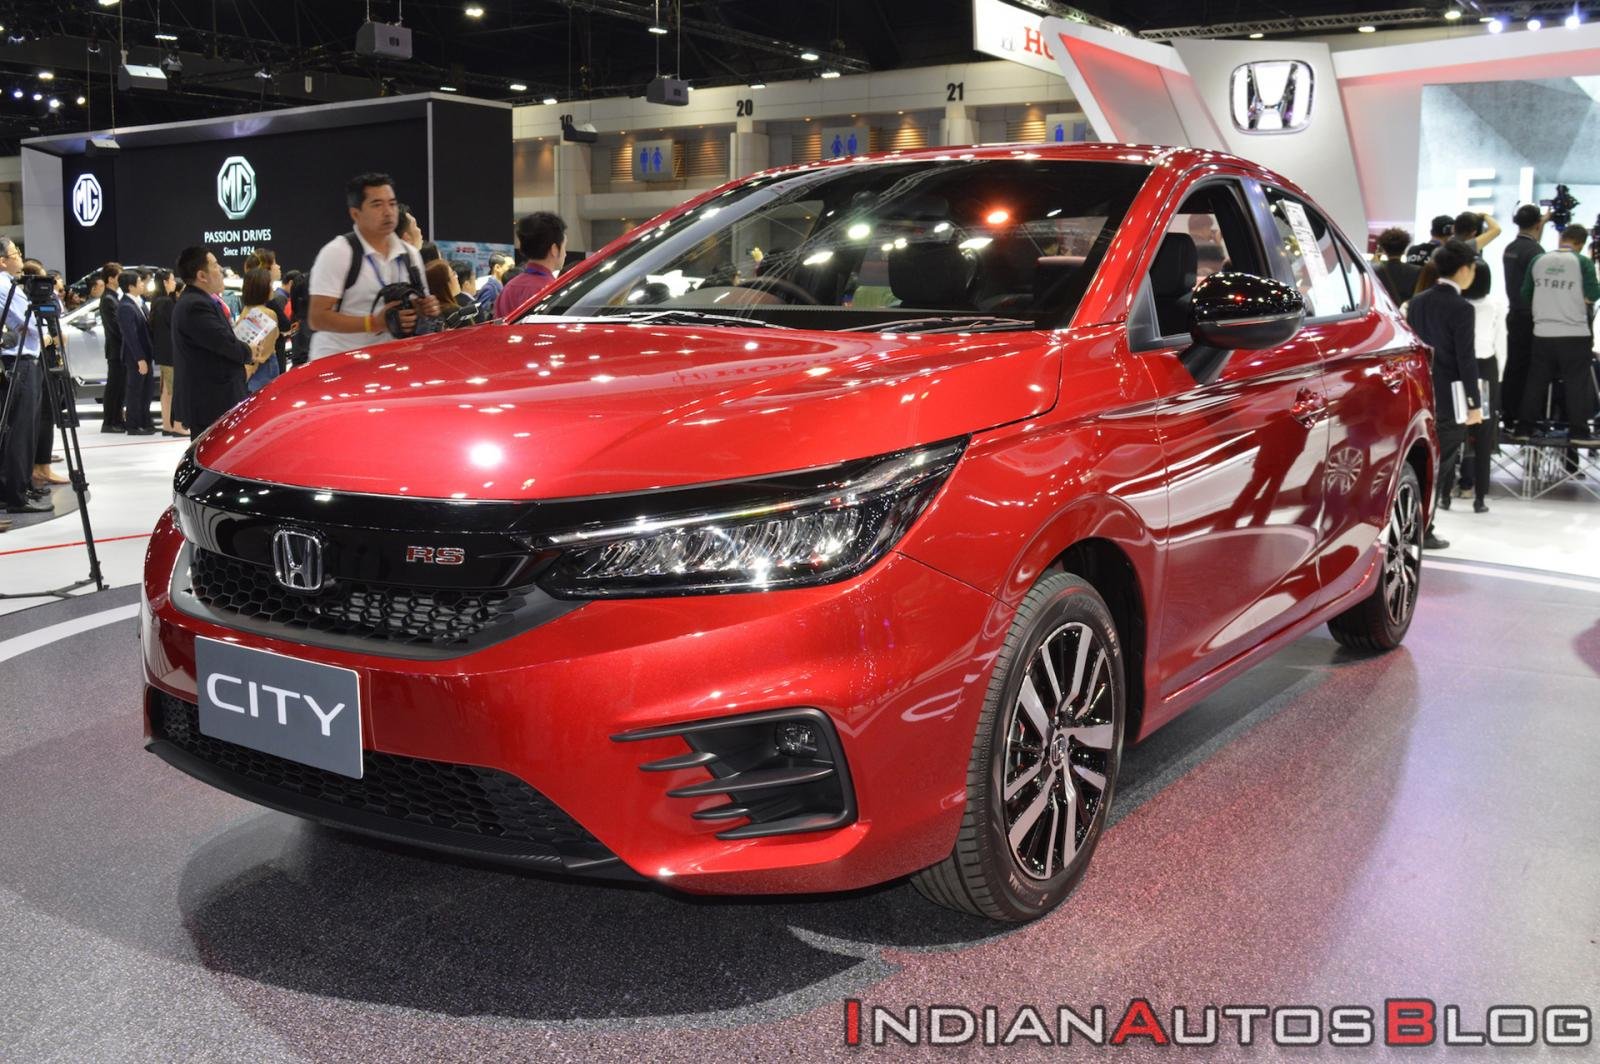 2020 Honda City launch in India soon